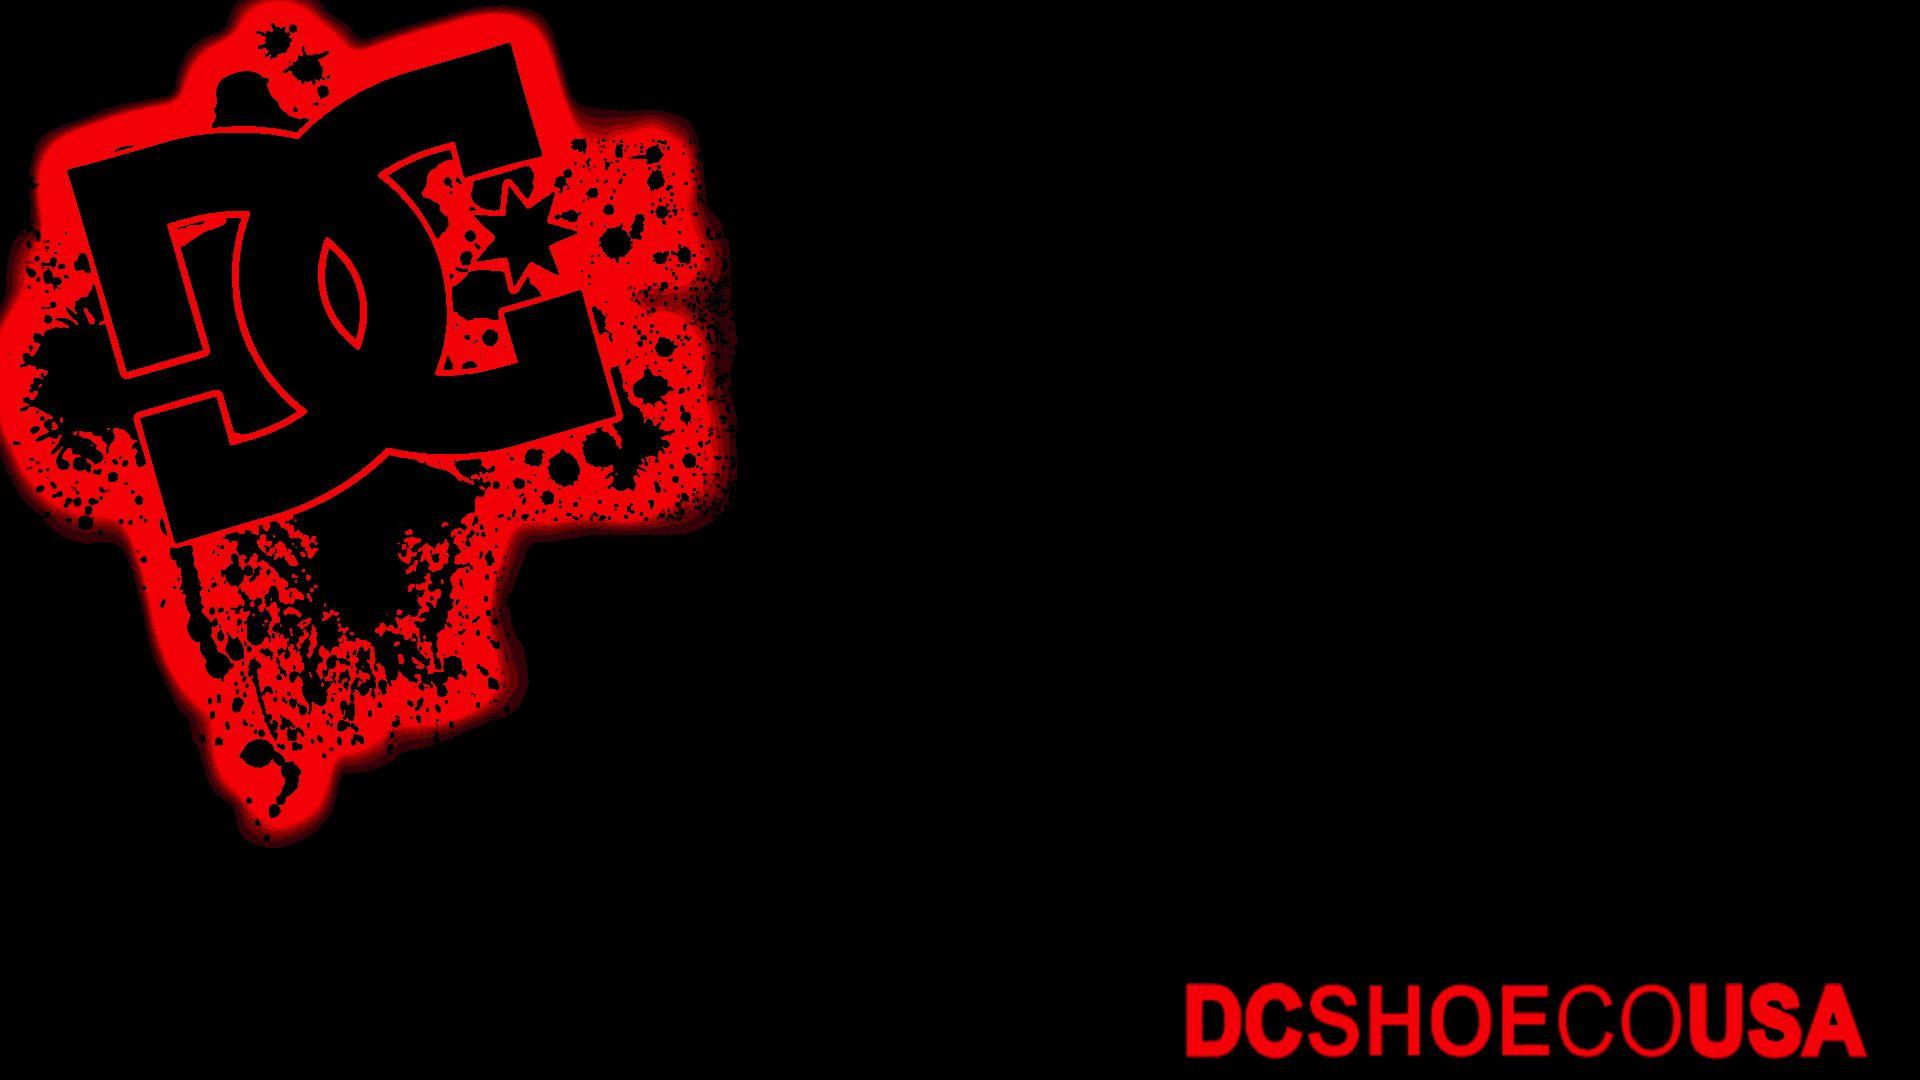 HD Dc Shoes Logo Photo Hd Desktop Wallpaper Cool Smart Phone Background Photos Widescreen Desktop Background Artworks Dual Monitors Colourful